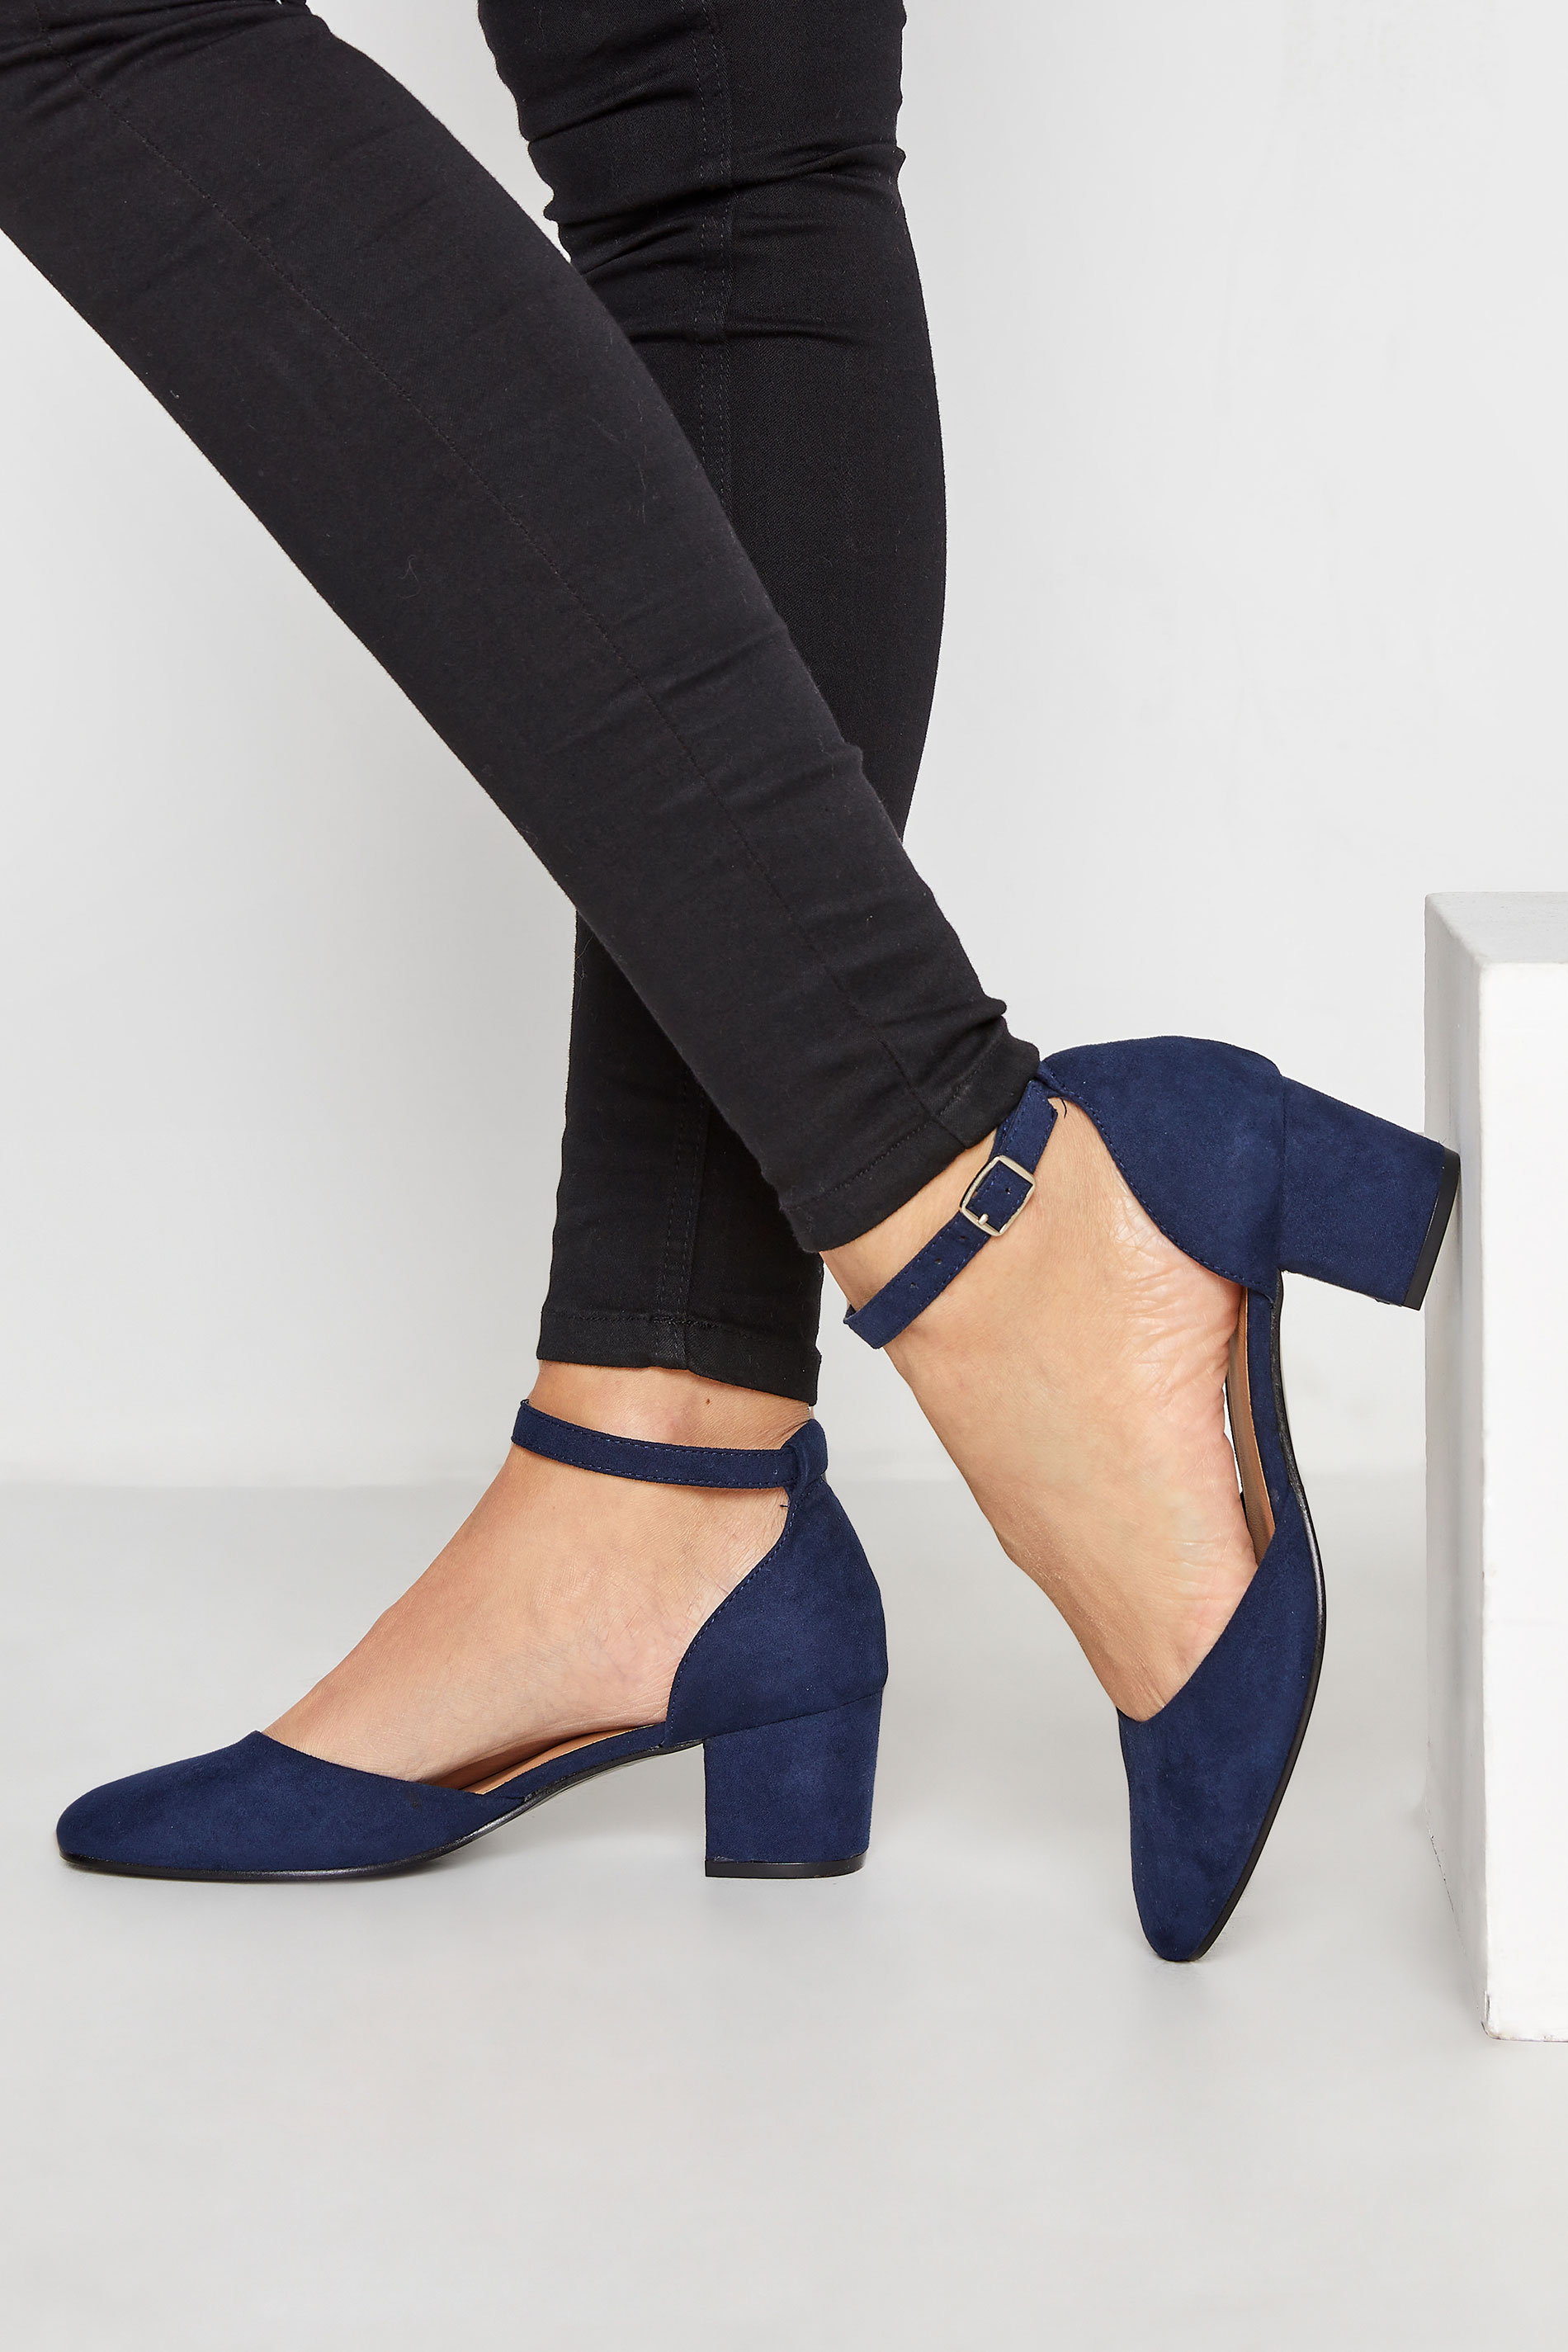 Womens Shoes Heels | LTS Navy Blue Block Heel Court Shoes In Standard D Fit - PG89505